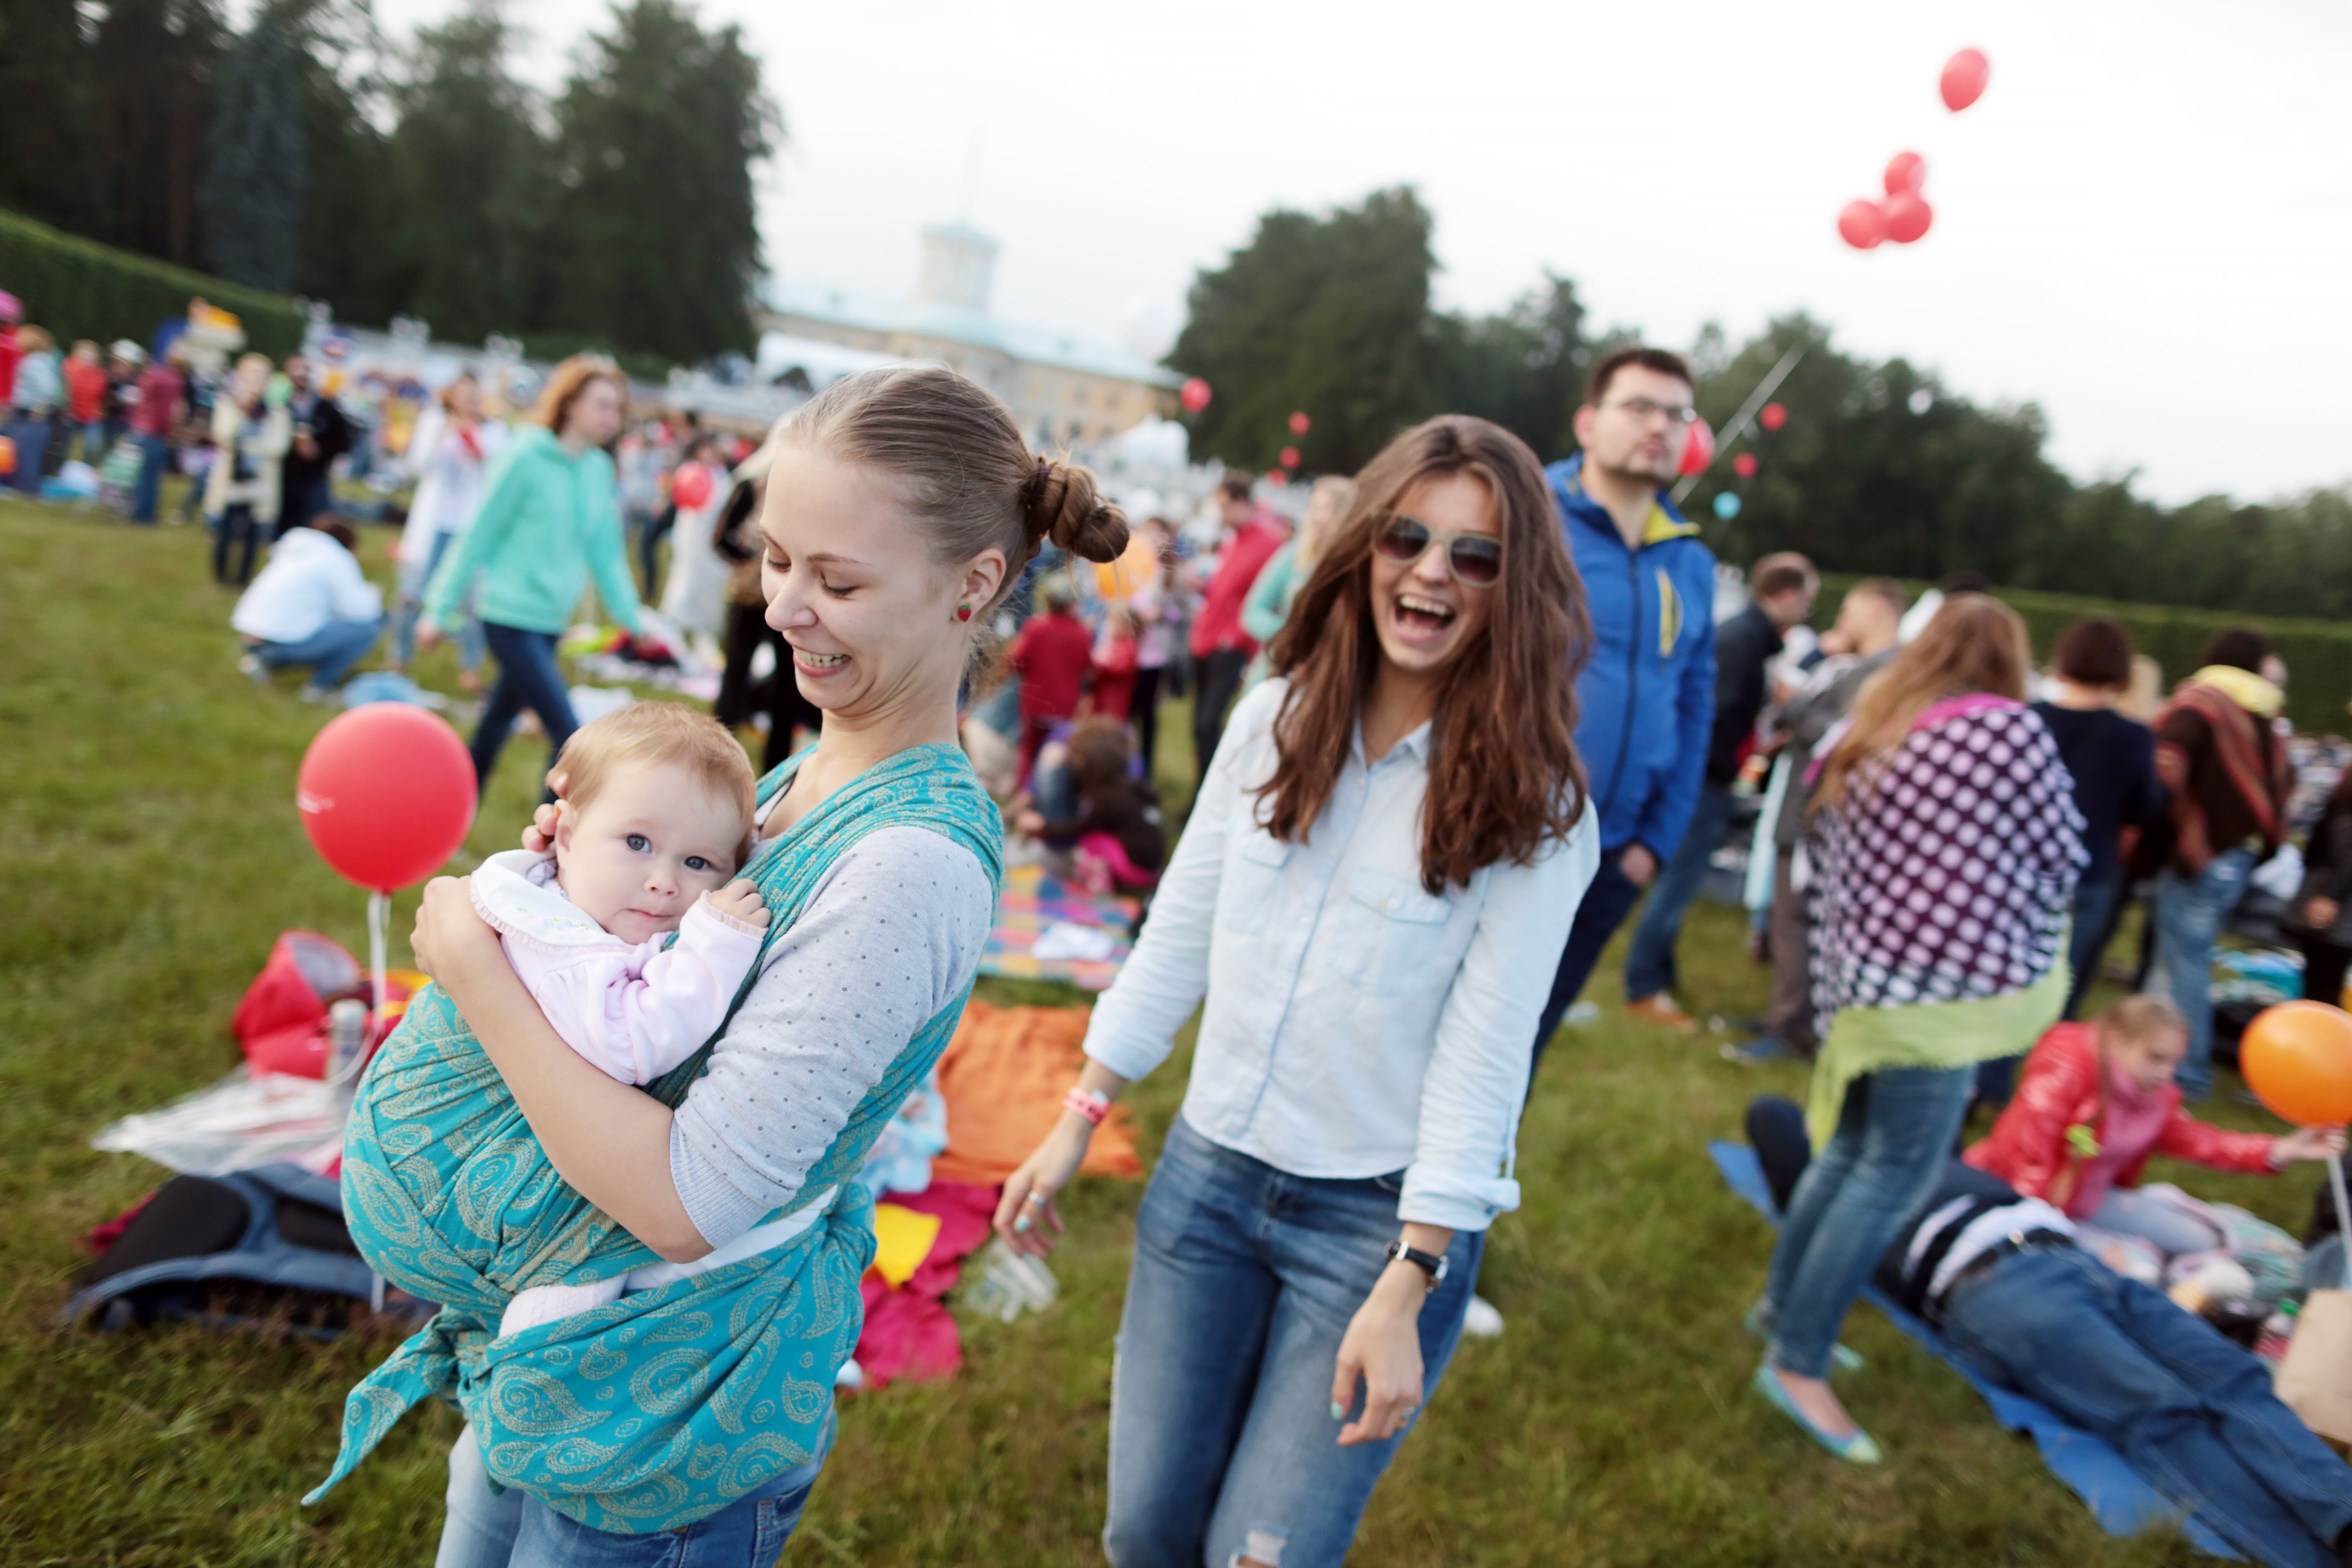 Площадки «PRO лето» на Сахарова и ВДНХ посетили порядка 150 тыс человек